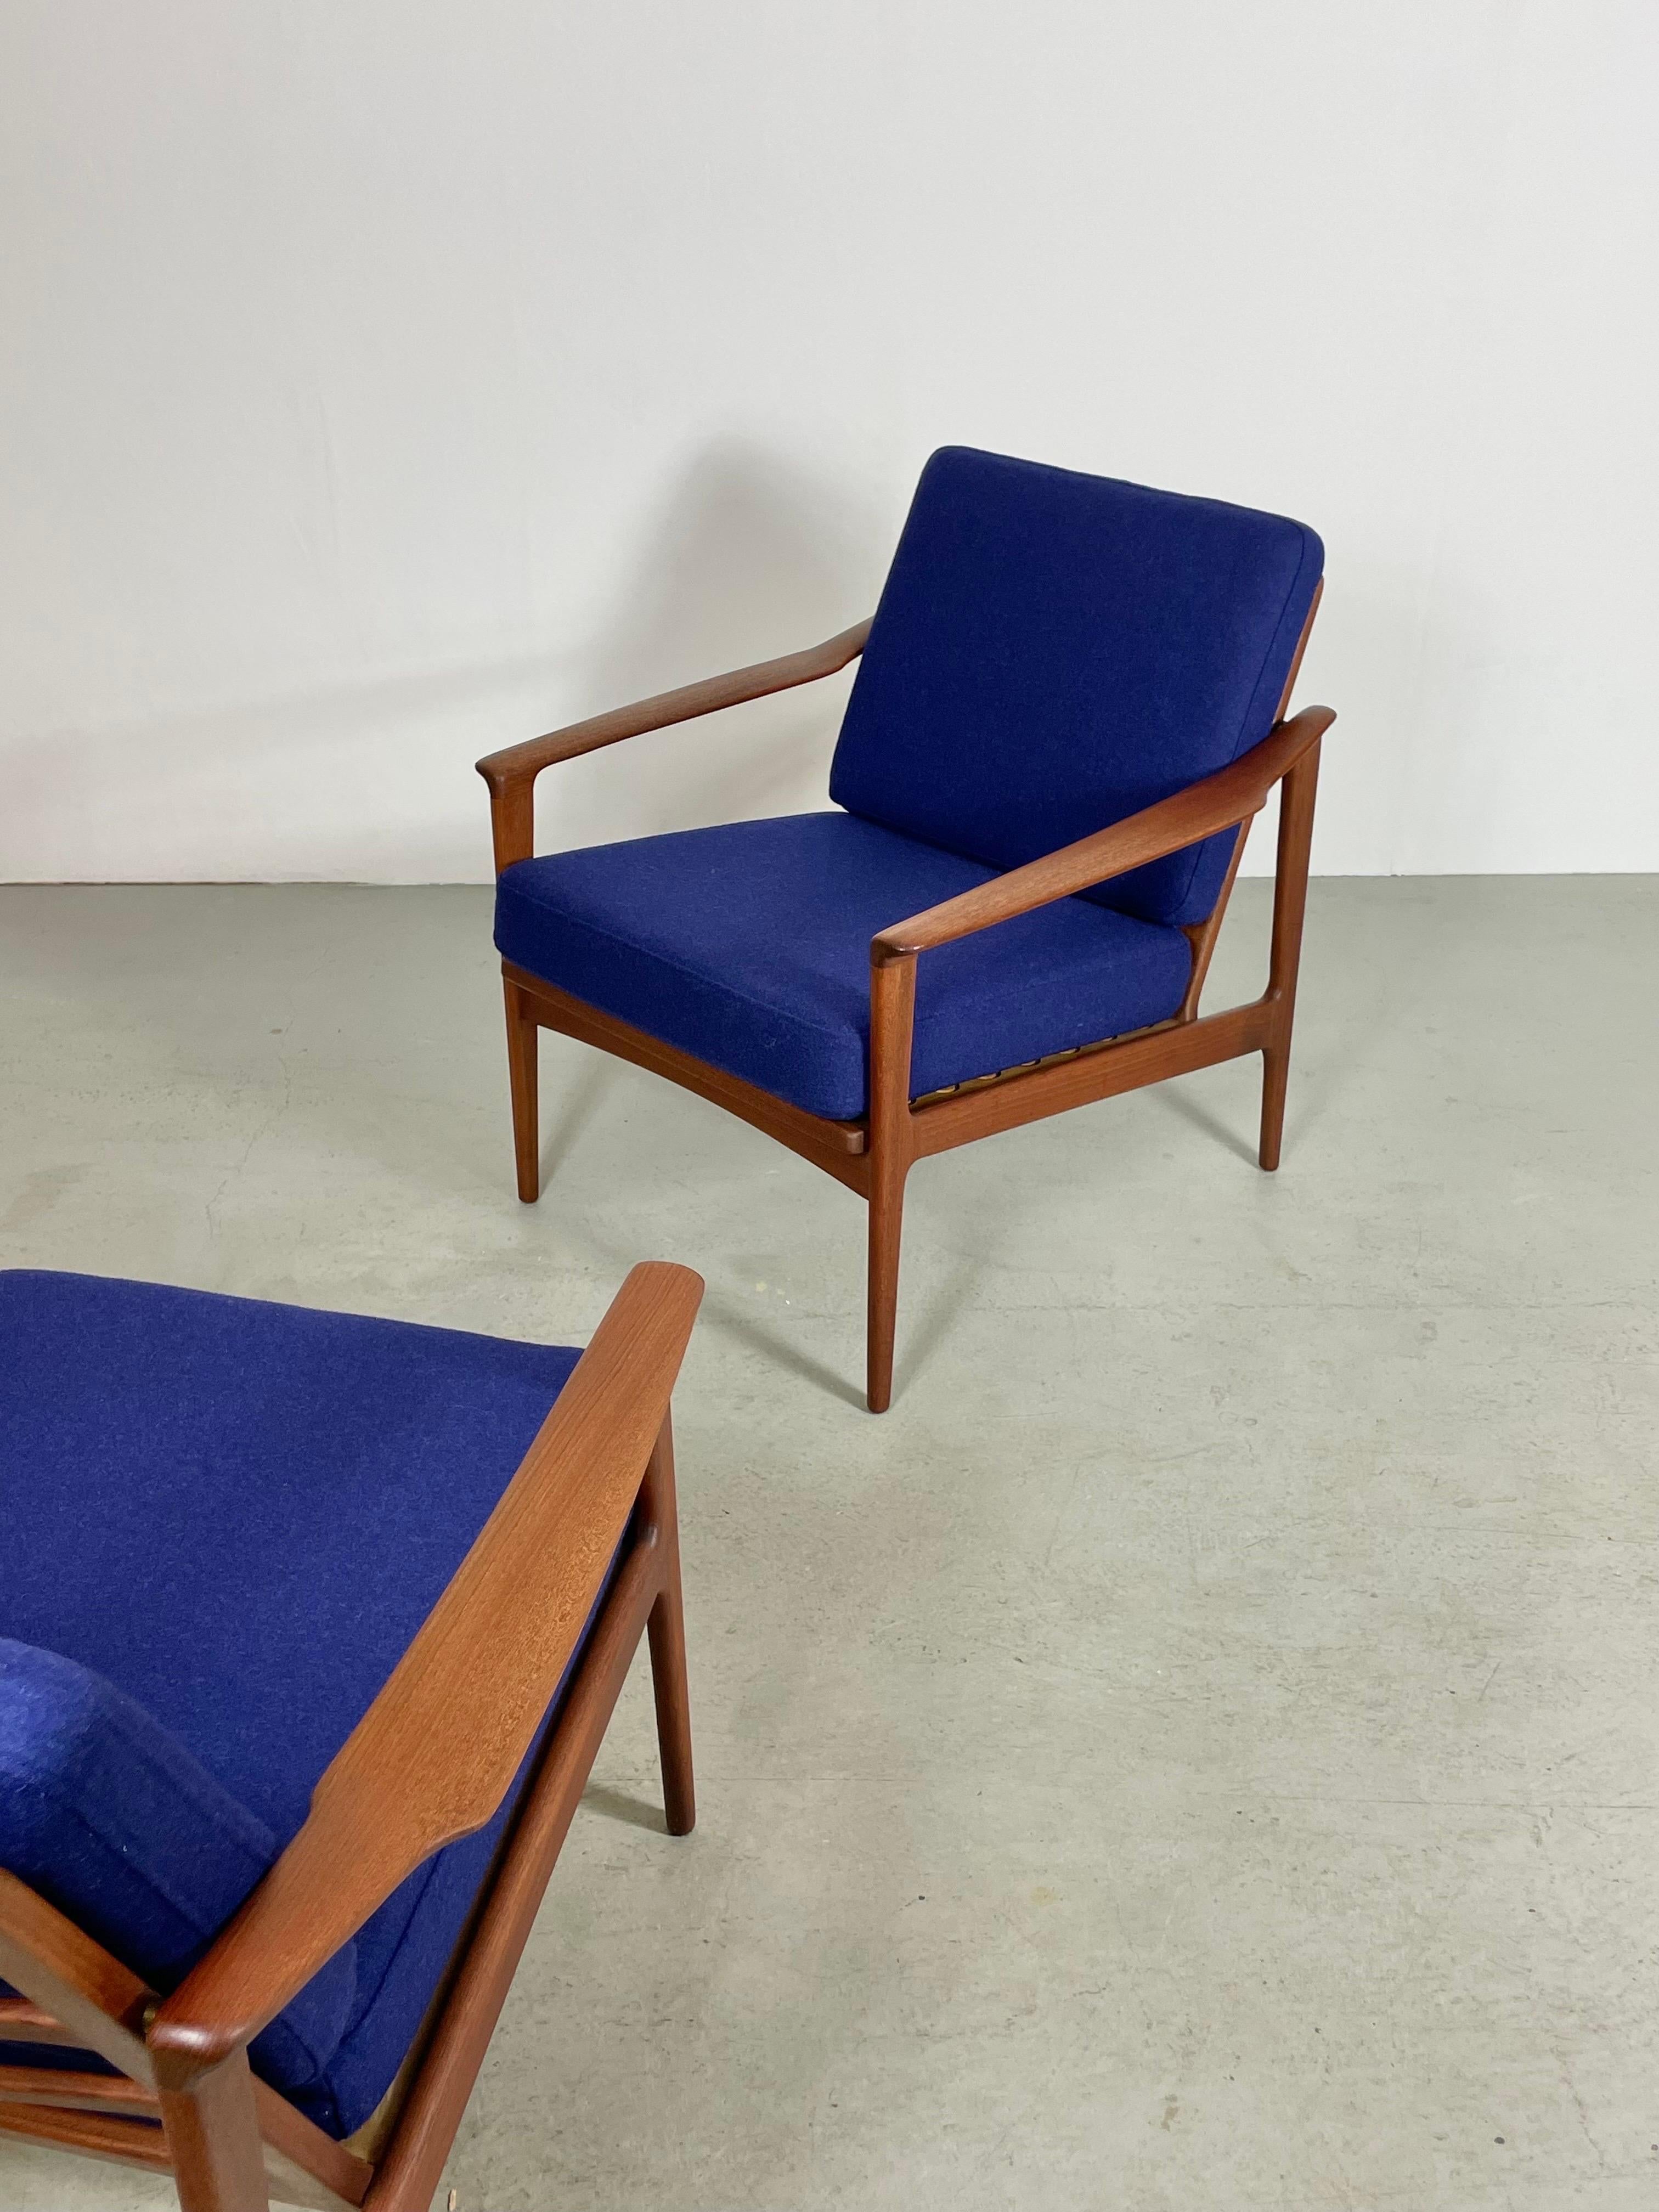 2x Mid-Century Teak Easy Chair by Ib Kofod-Larsen 1960s Denmark For Sale 9